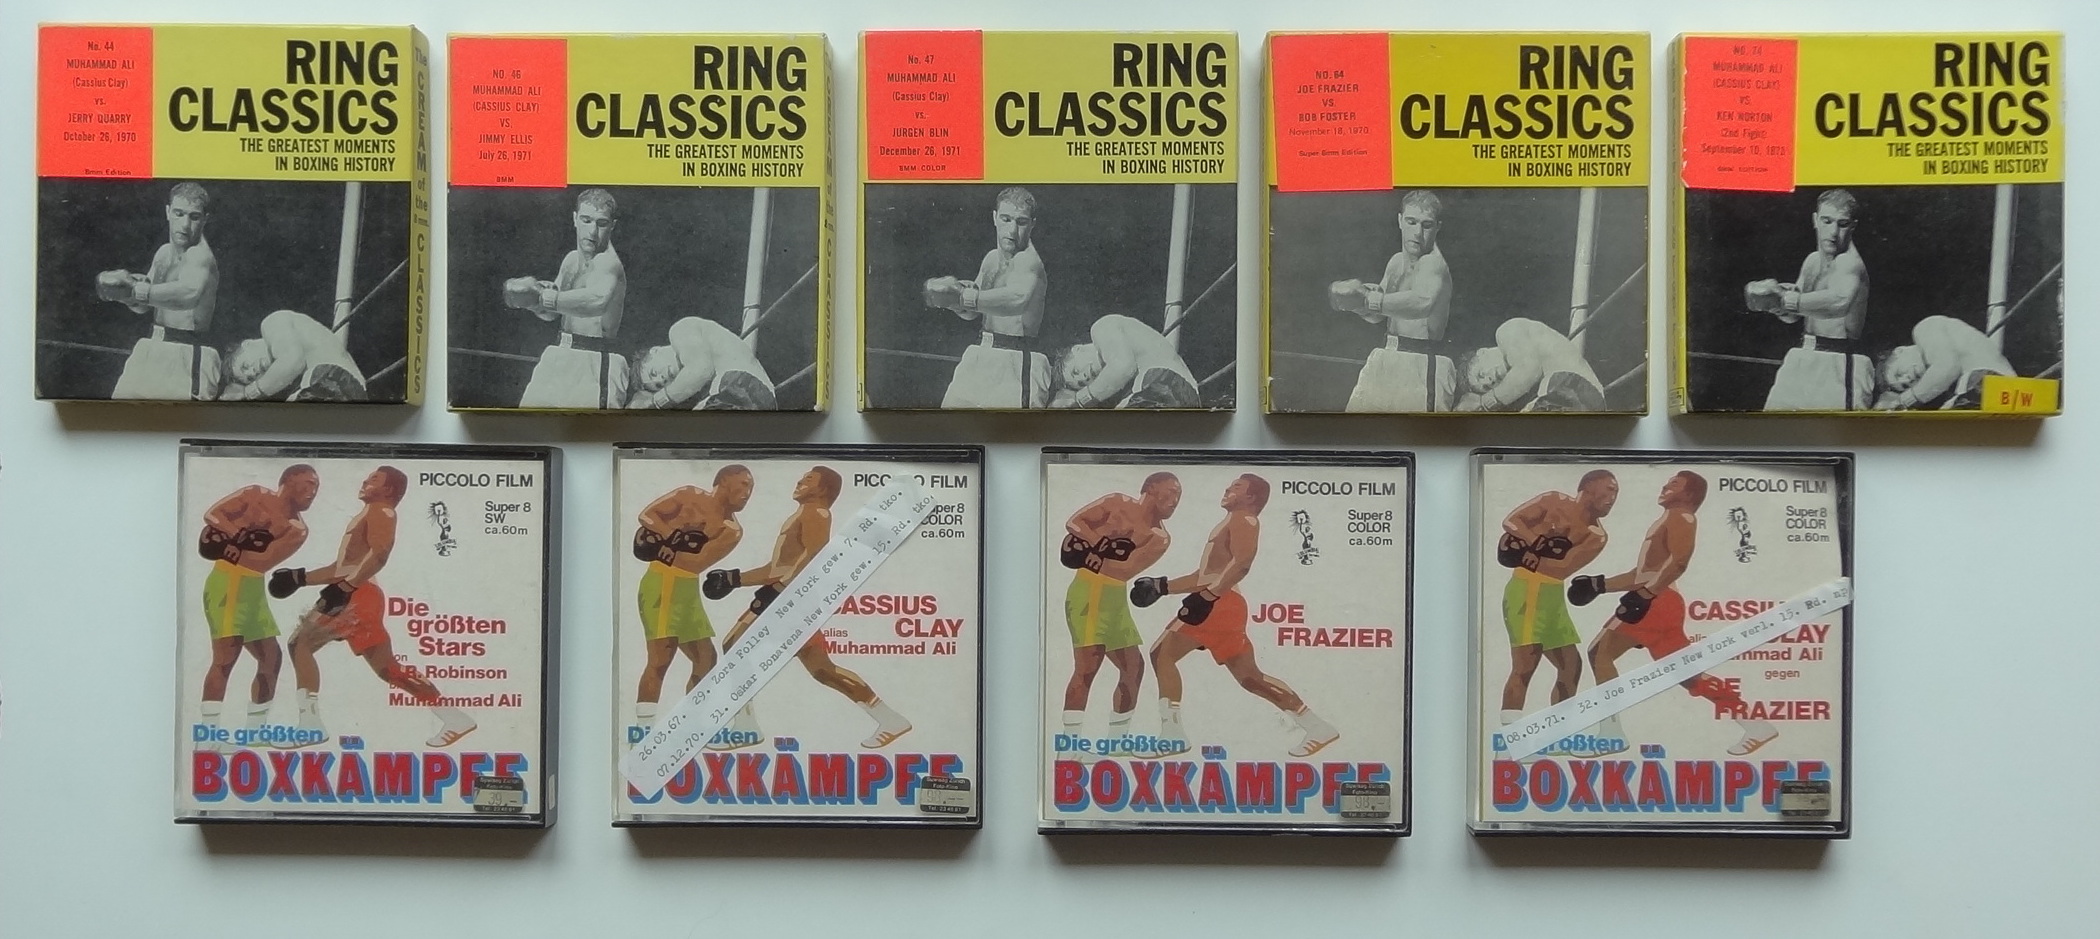 16 Original Super 8mm Films on Boxing-1